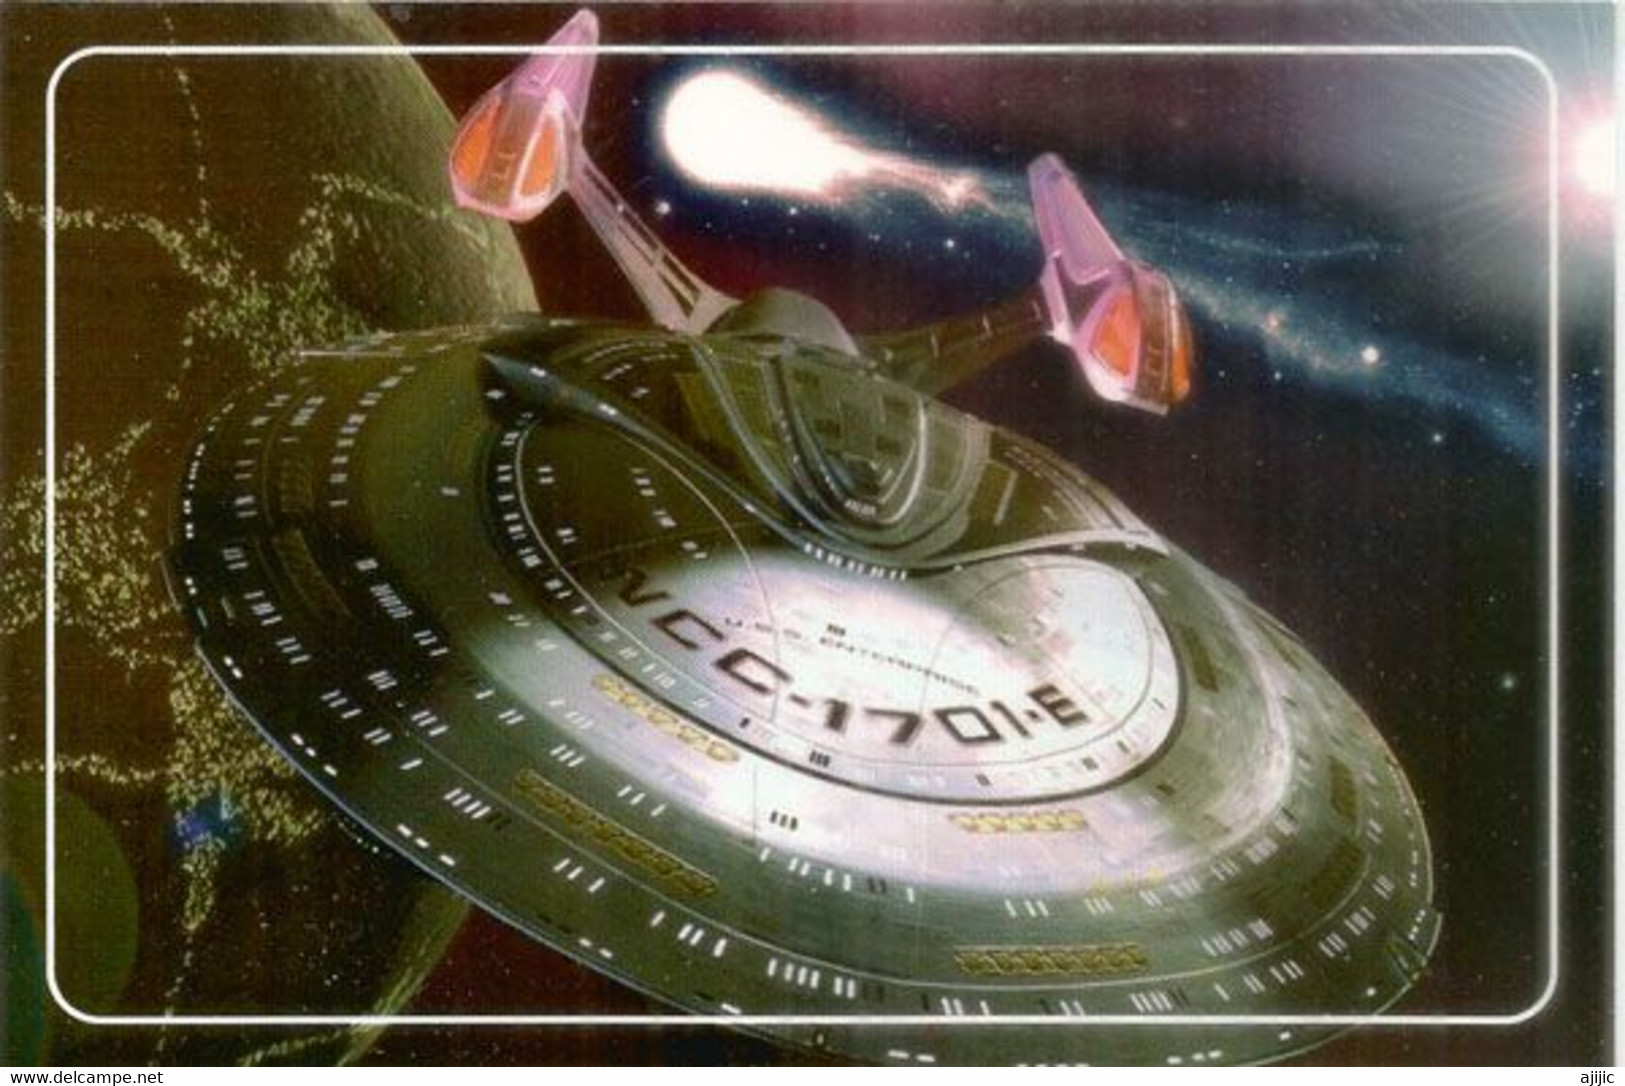 Star Trek Enterprise NCC-1701-E Electronic Starship. Postcard From Russia. - Astronomie